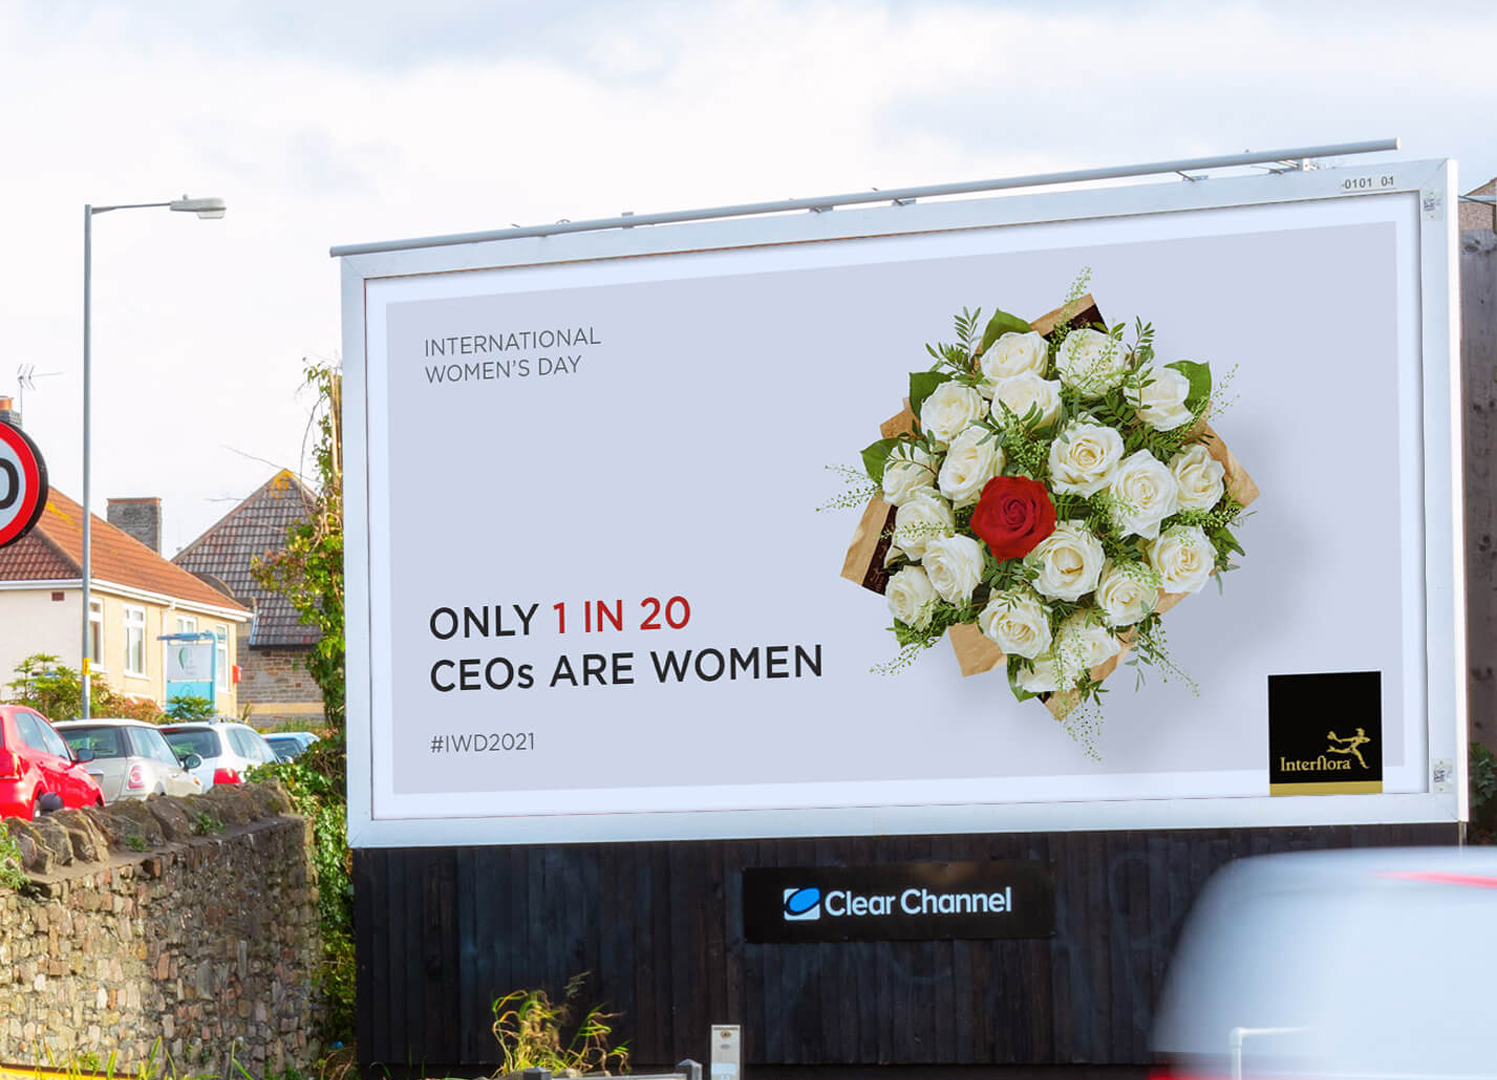 amy-jones-interflora-international-womens-day-billboard